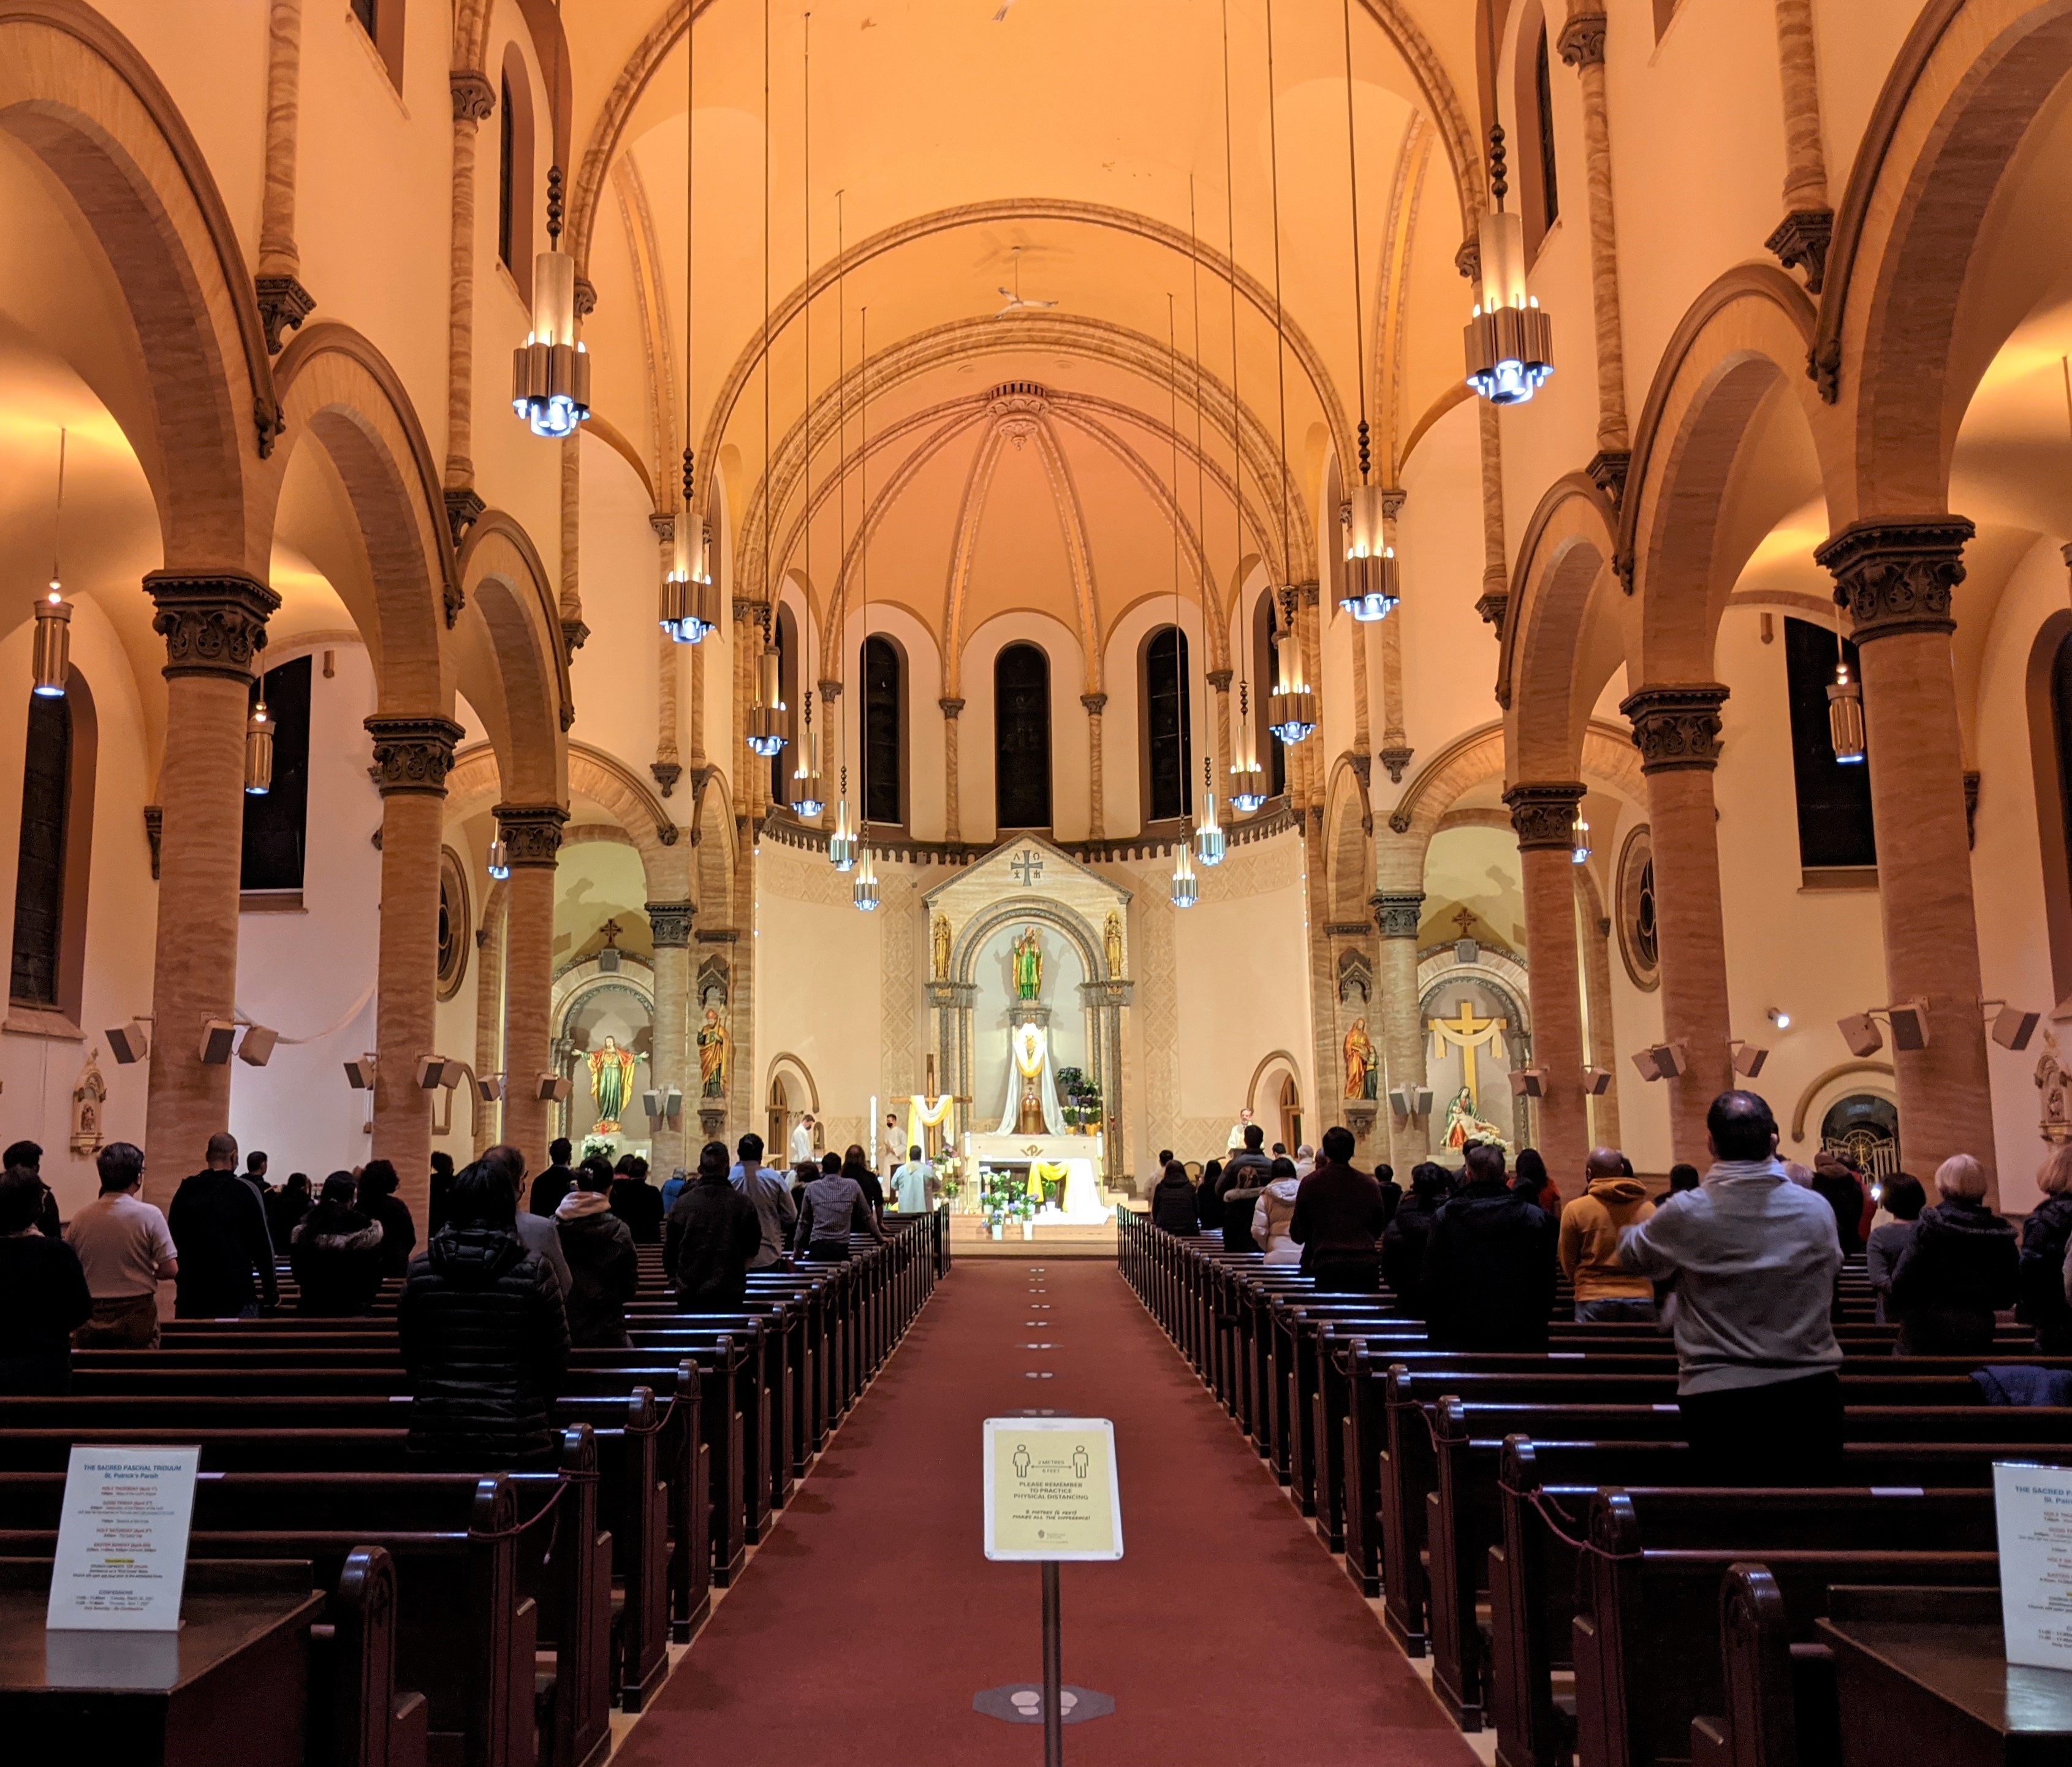 Mass at St. Patricks